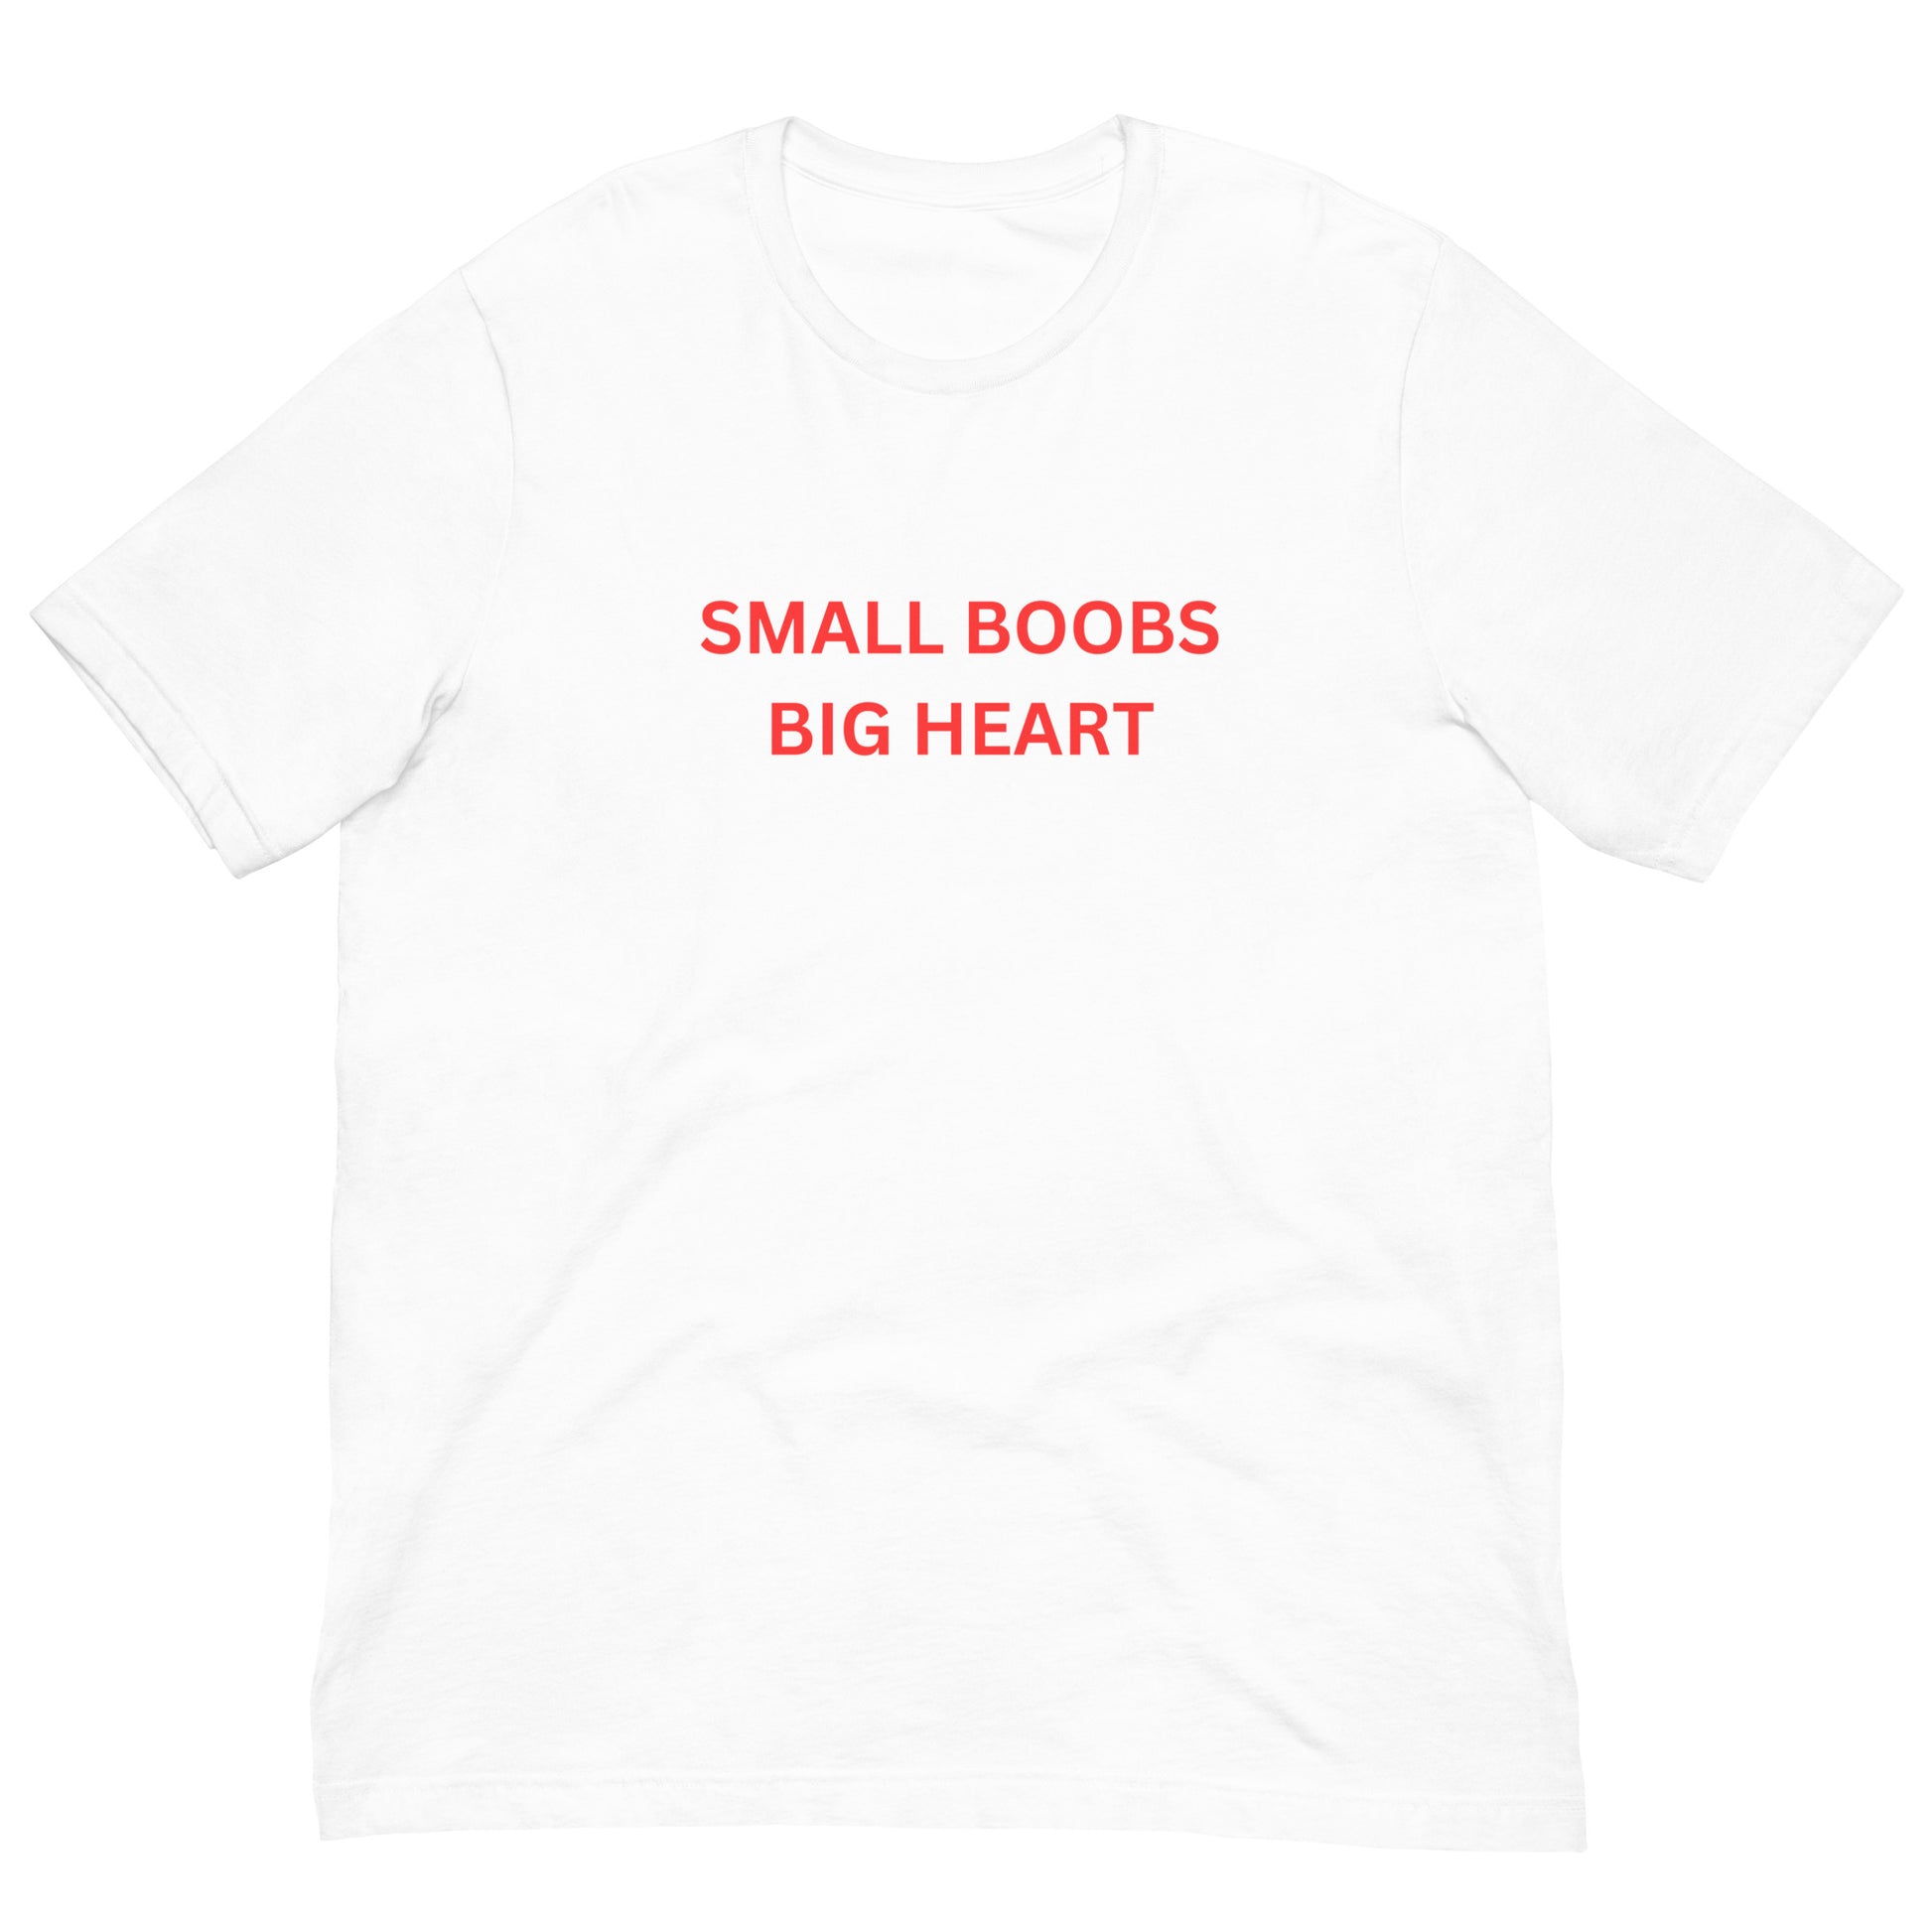 Small Boobs big heart Funny t-shirt